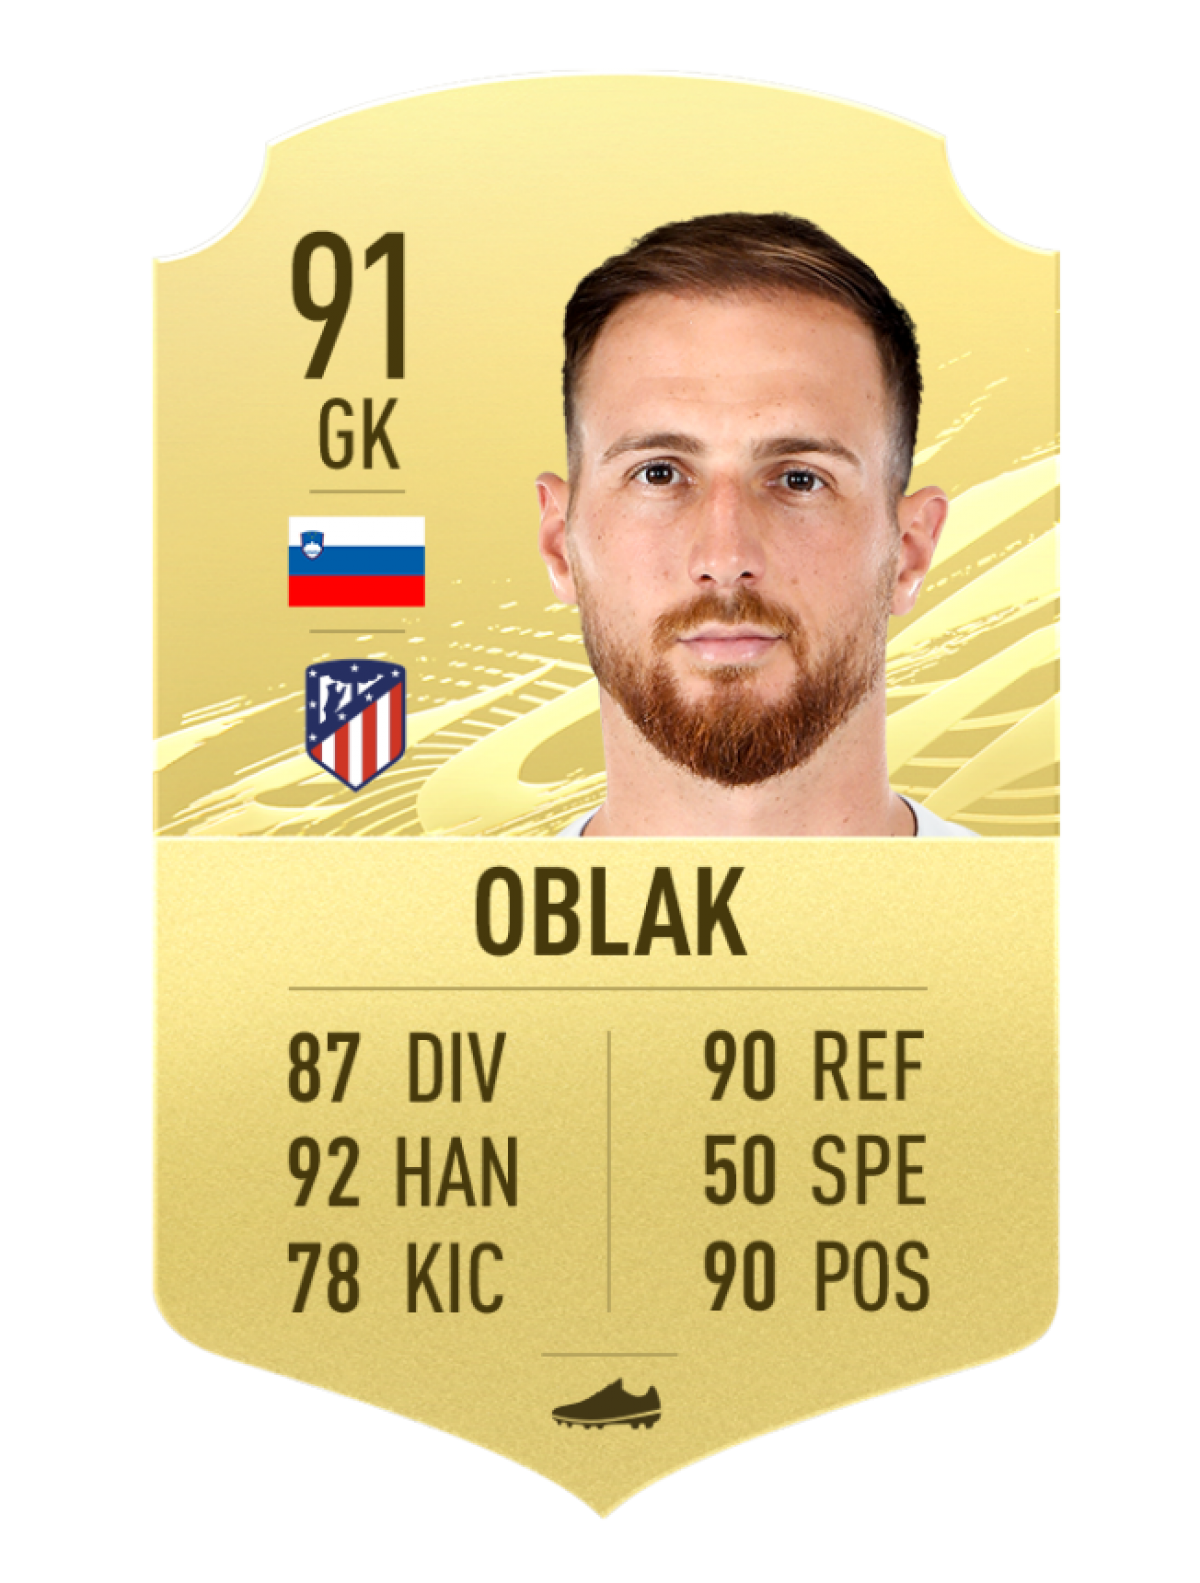 1. Jan Oblak (Atlético de Madrid) chỉ số tổng 91.